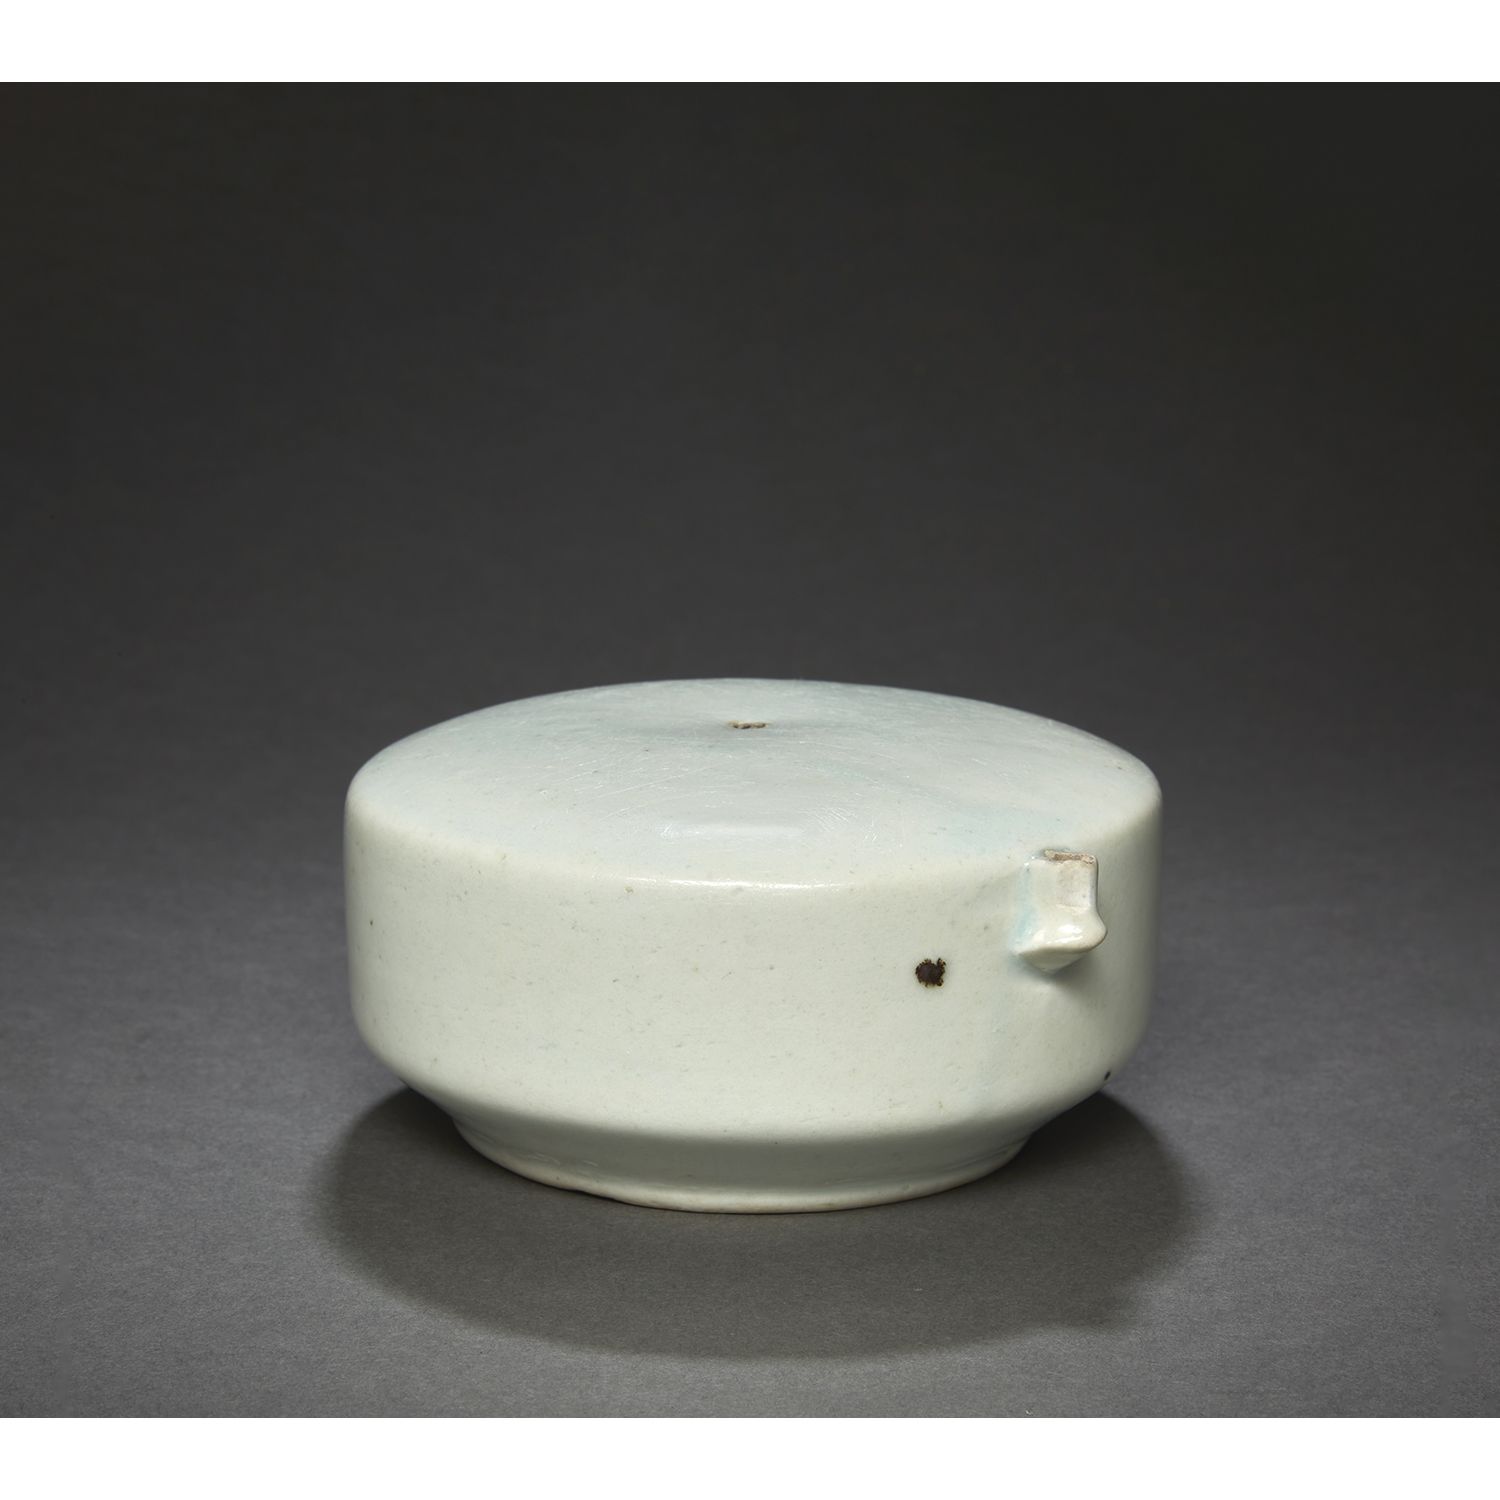 Null DROP COUNTER
白色釉面瓷器，圆形。底座上有一个旧的Spink标签。
(缺口至壶口)
韩国，朝鲜，18世纪末。
白釉瓷水滴器，韩国，18世纪&hellip;